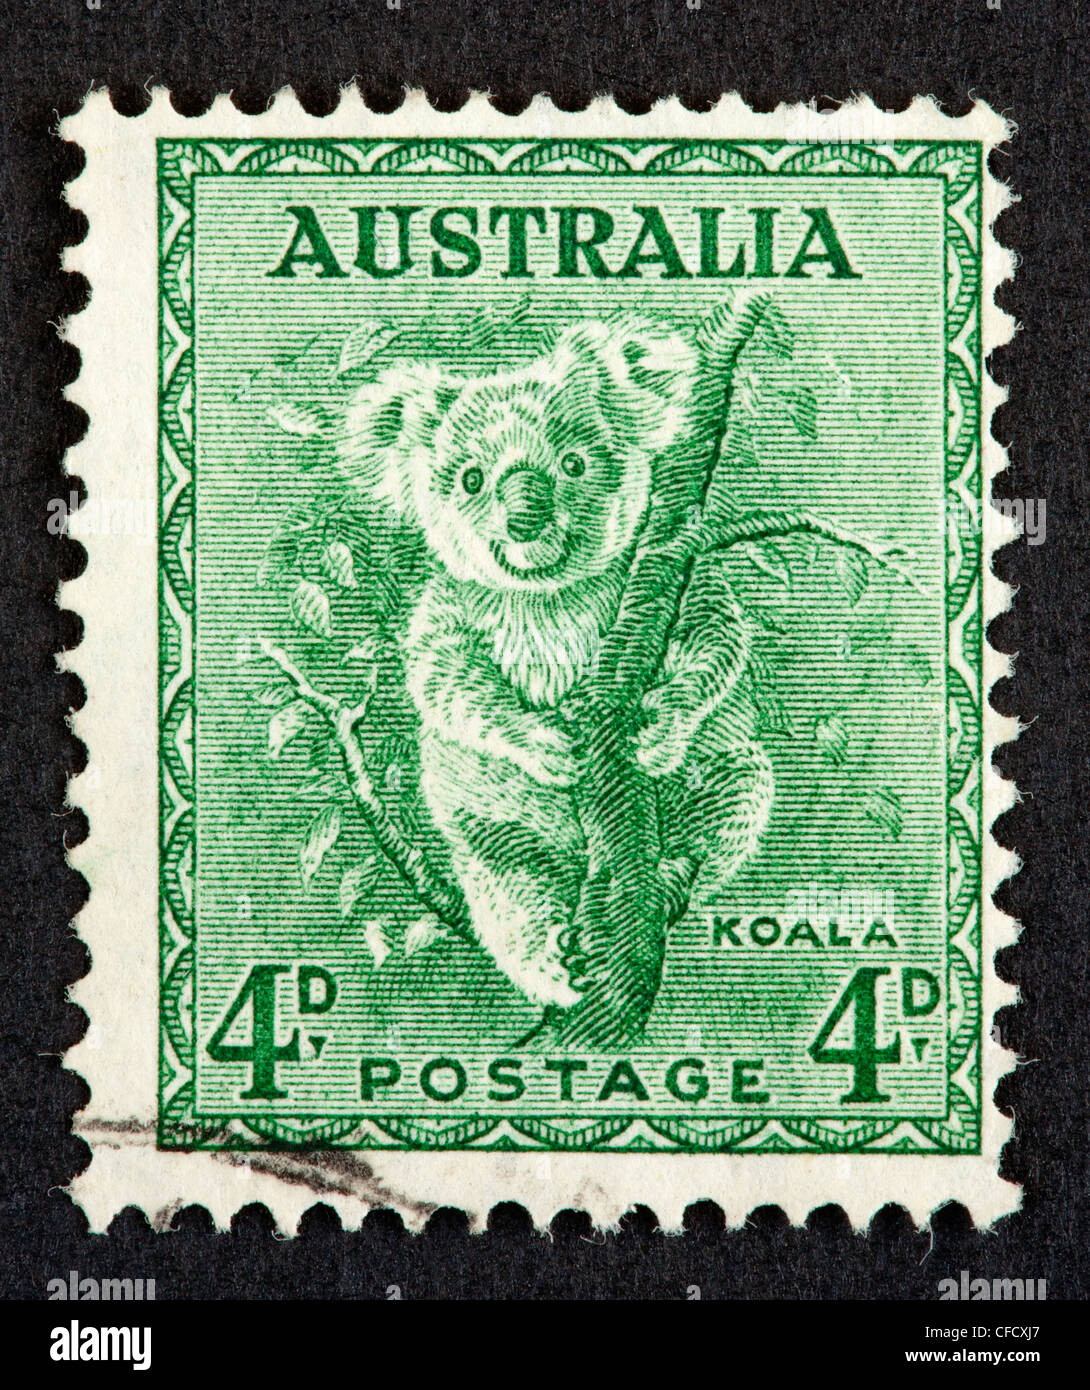 postage stamp Stock Photo - Alamy